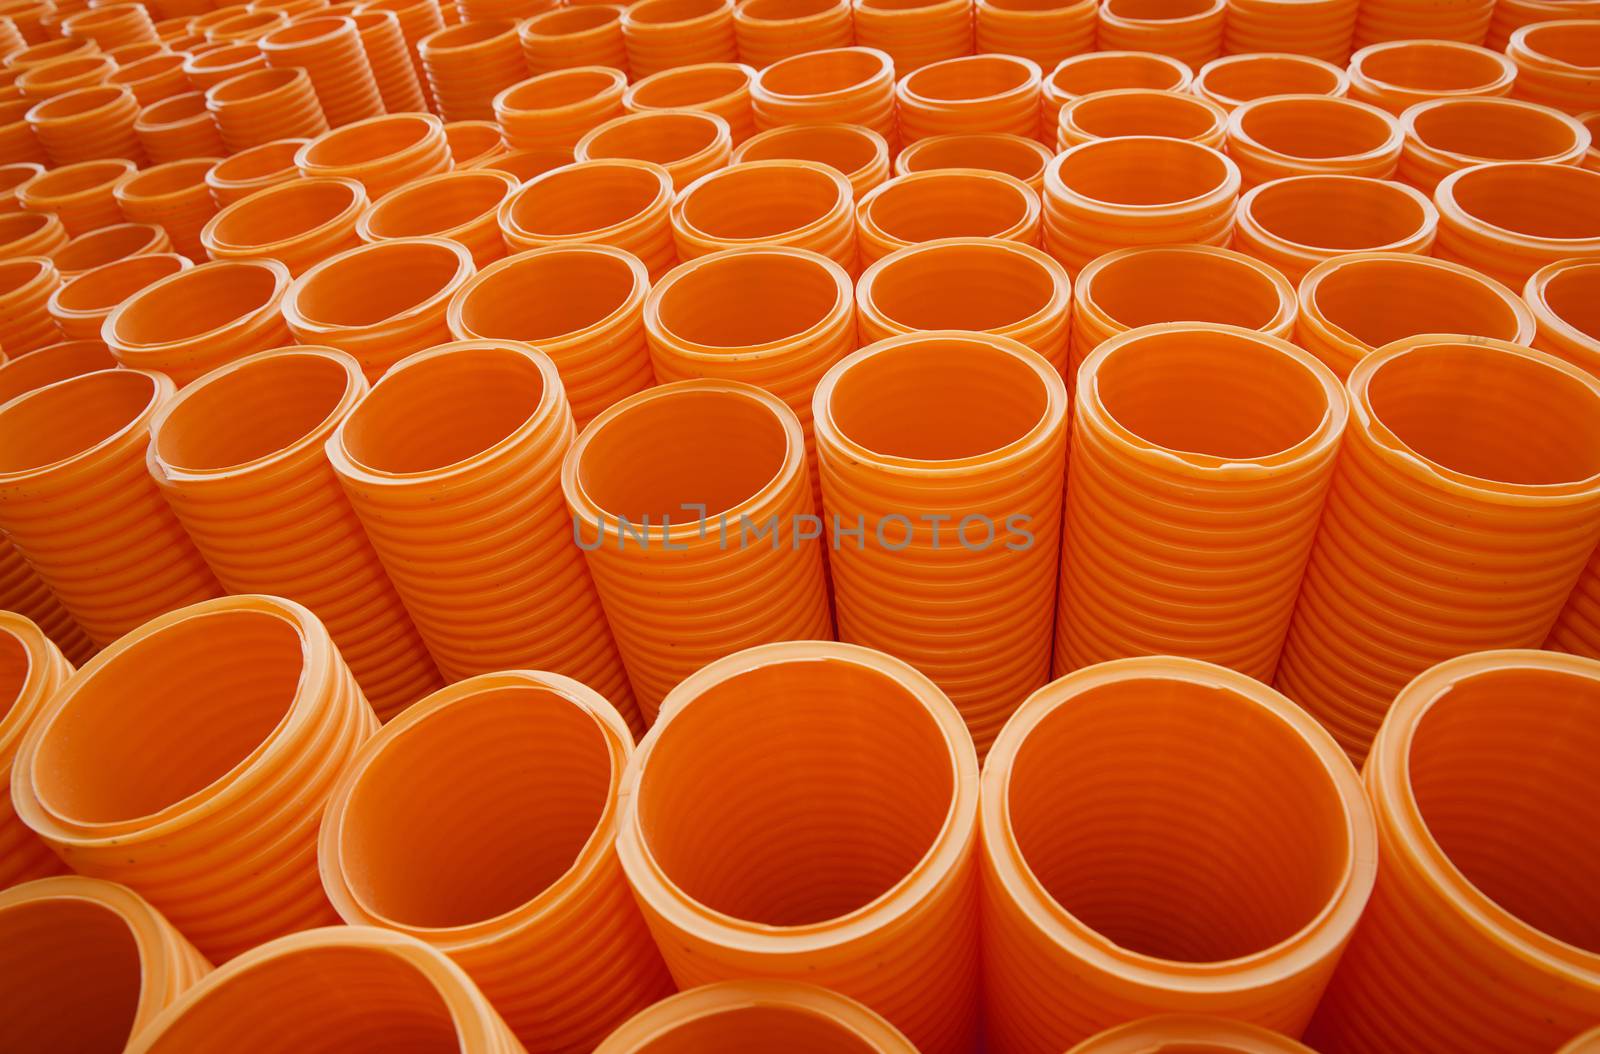 Large Group of Orange Industrial Plastic Pipes Full Frame by gemenacom